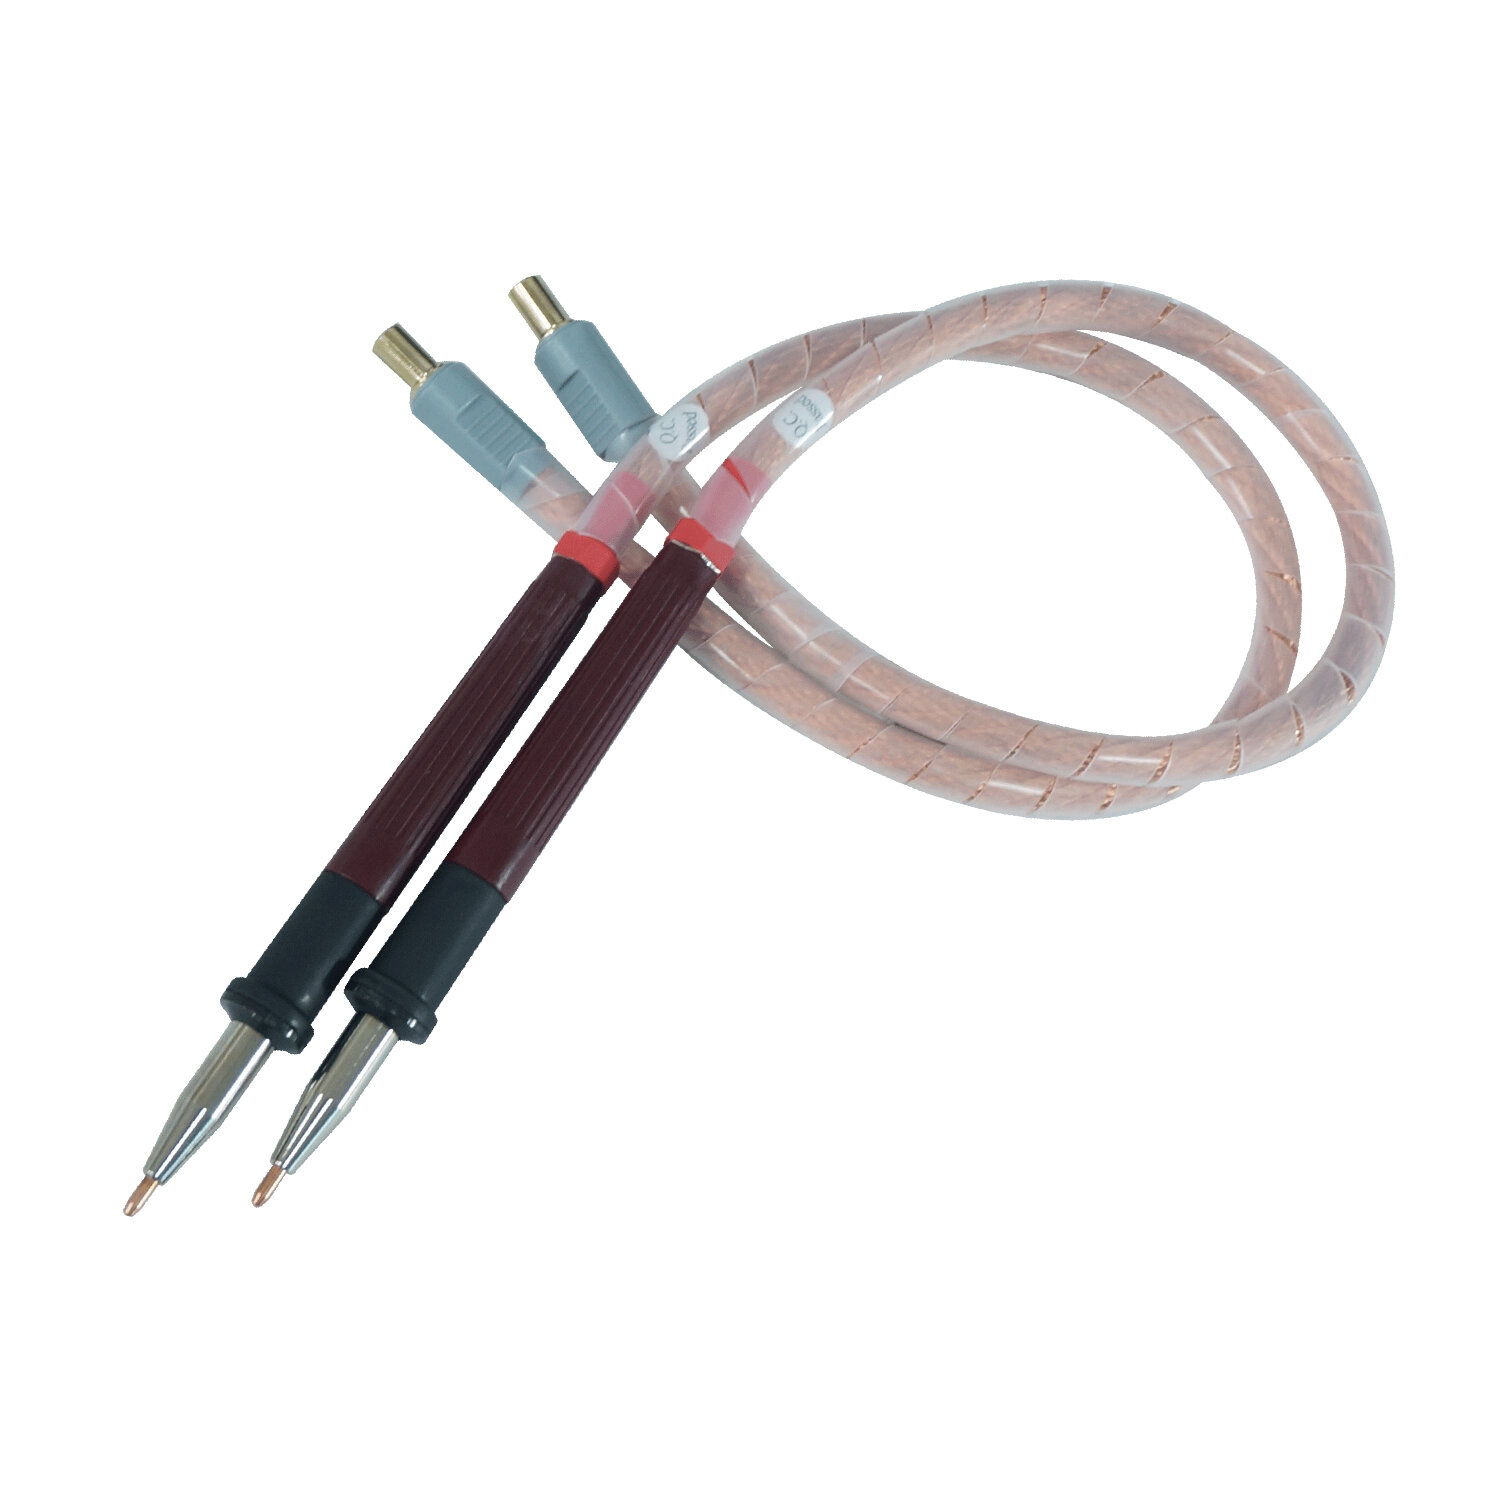 GLITTE 75A Adjustable Spot Welding Pen with Superior 3mmx70mm Welding Needles 25²/35²/50² Options Versatile and Efficient Design suitable for Various Welding Applications